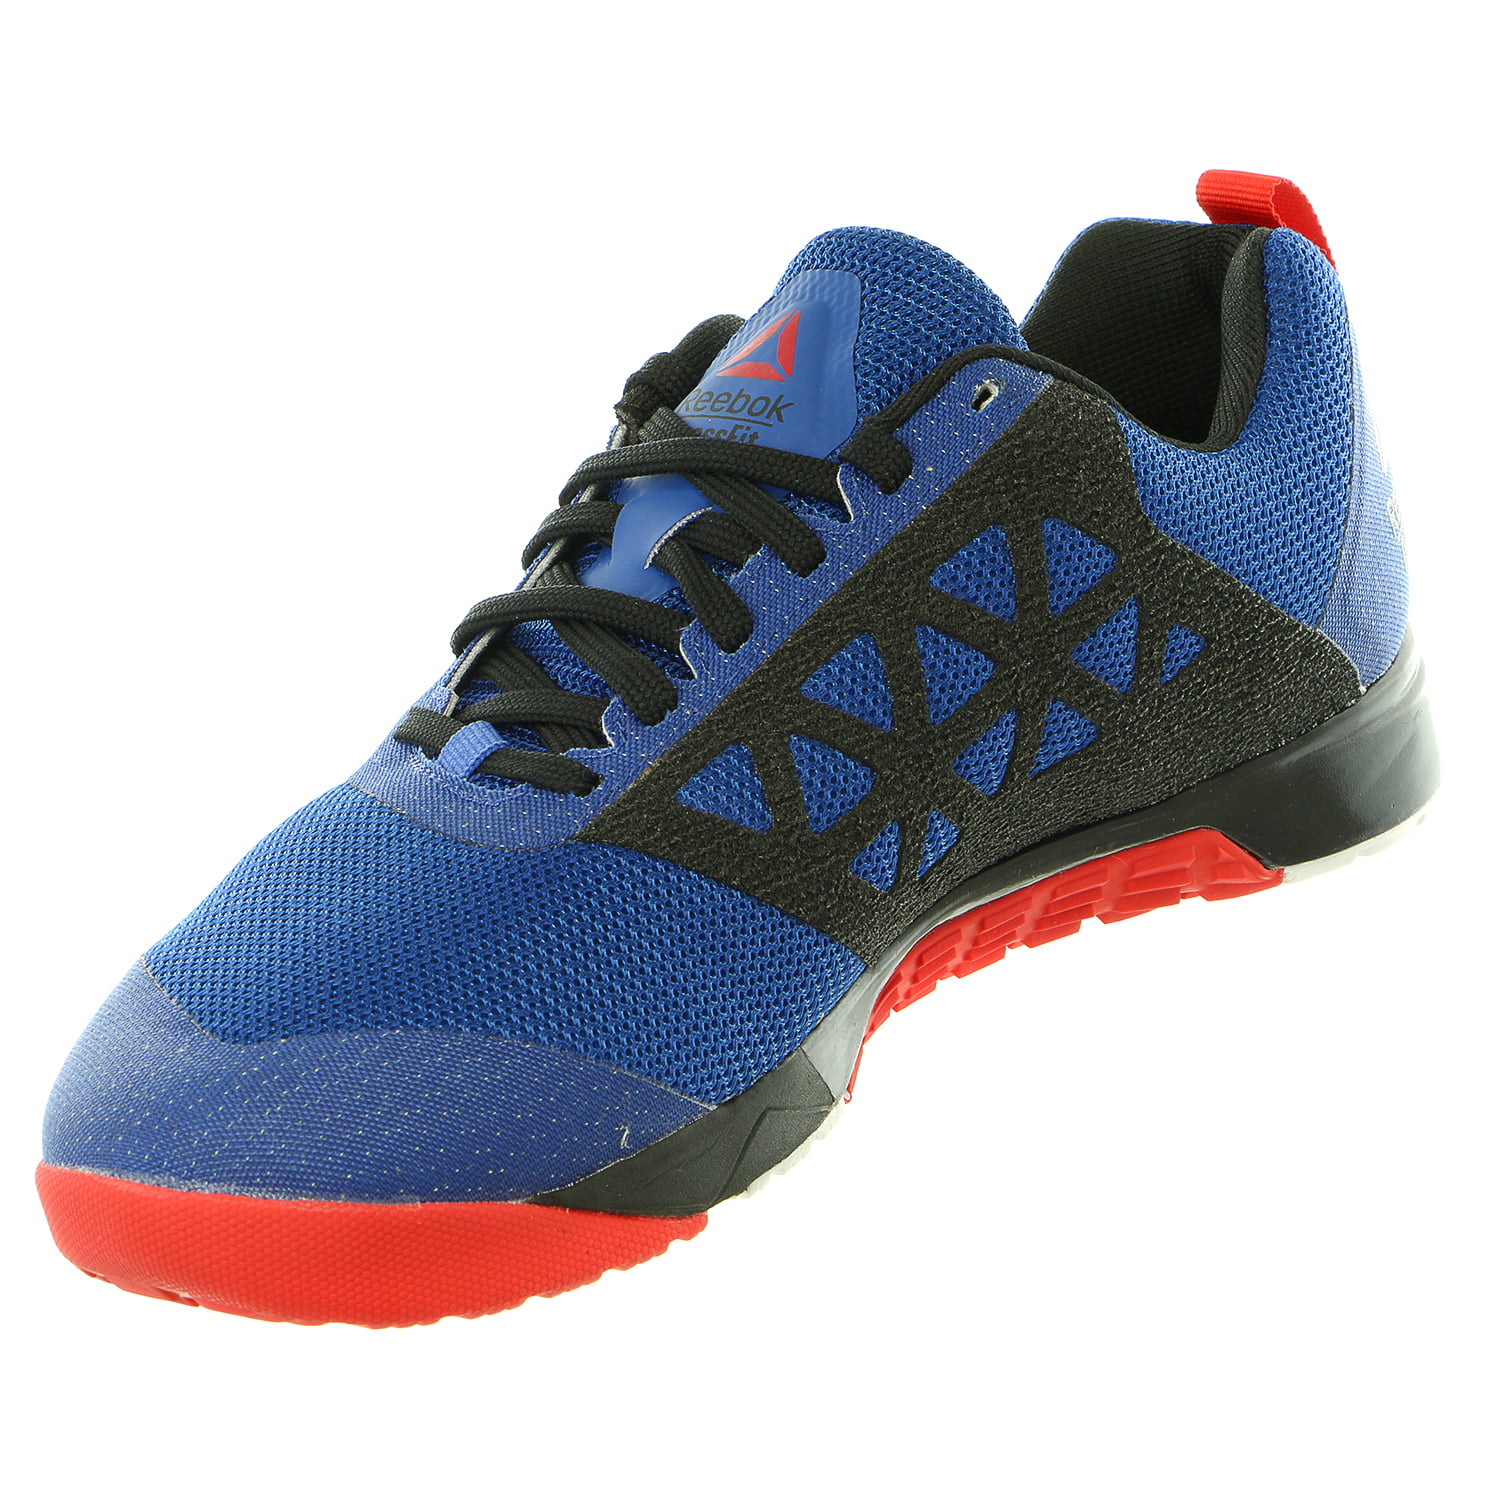 boom esthetisch toxiciteit Reebok Crossfit Nano 6.0 Cross-Training Sneaker Shoe - Mens - Walmart.com